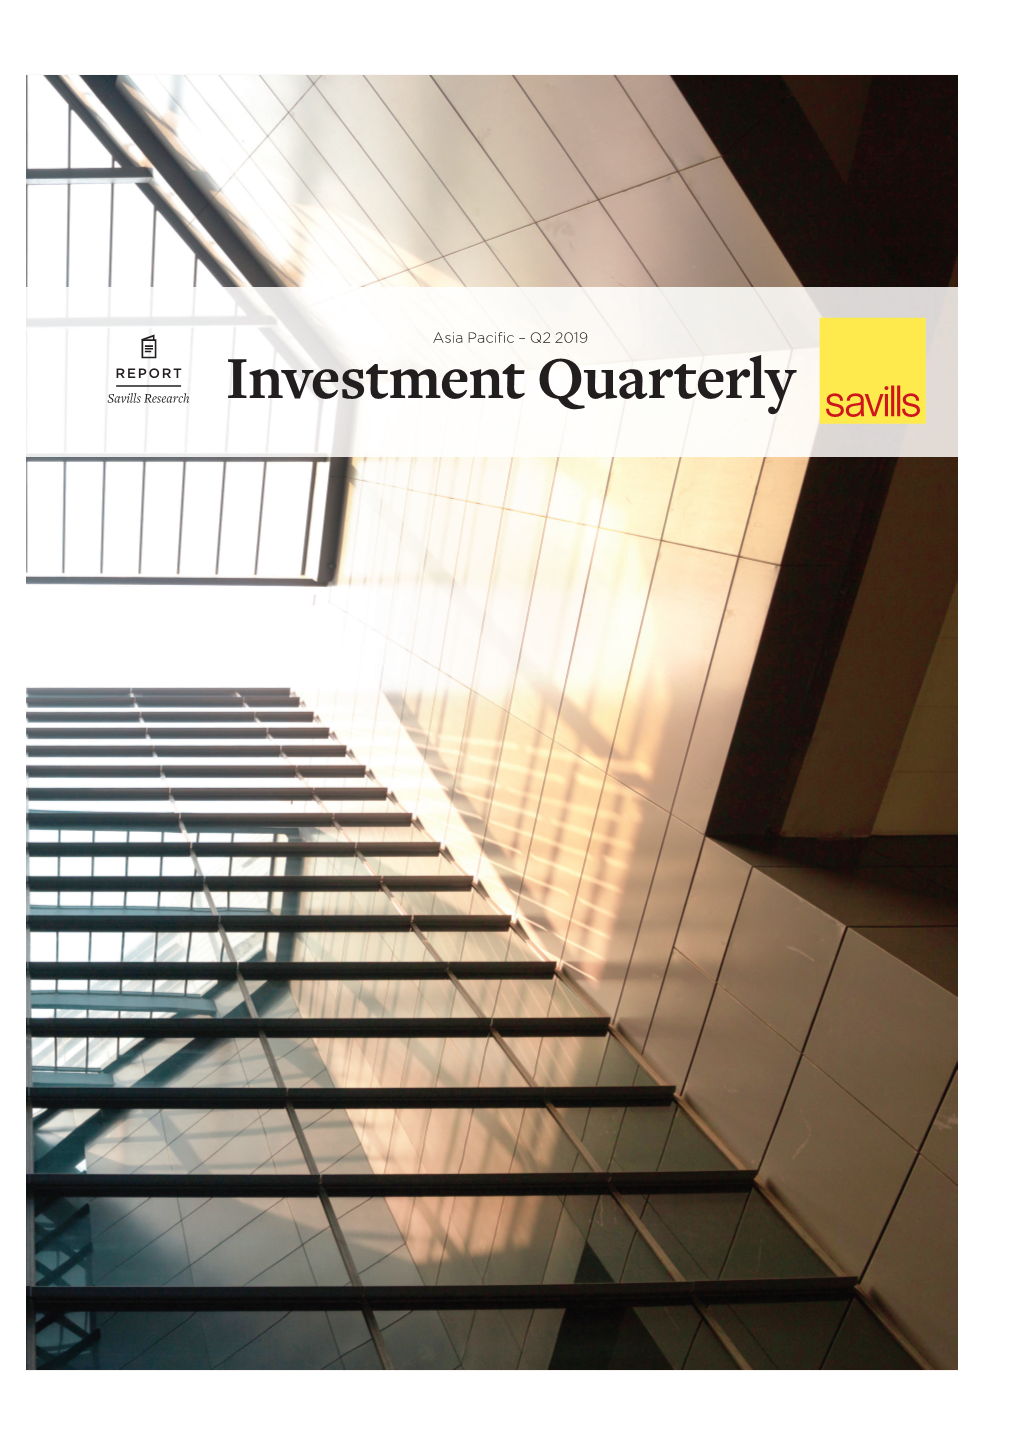 Asia Pacific Investment Quarterly